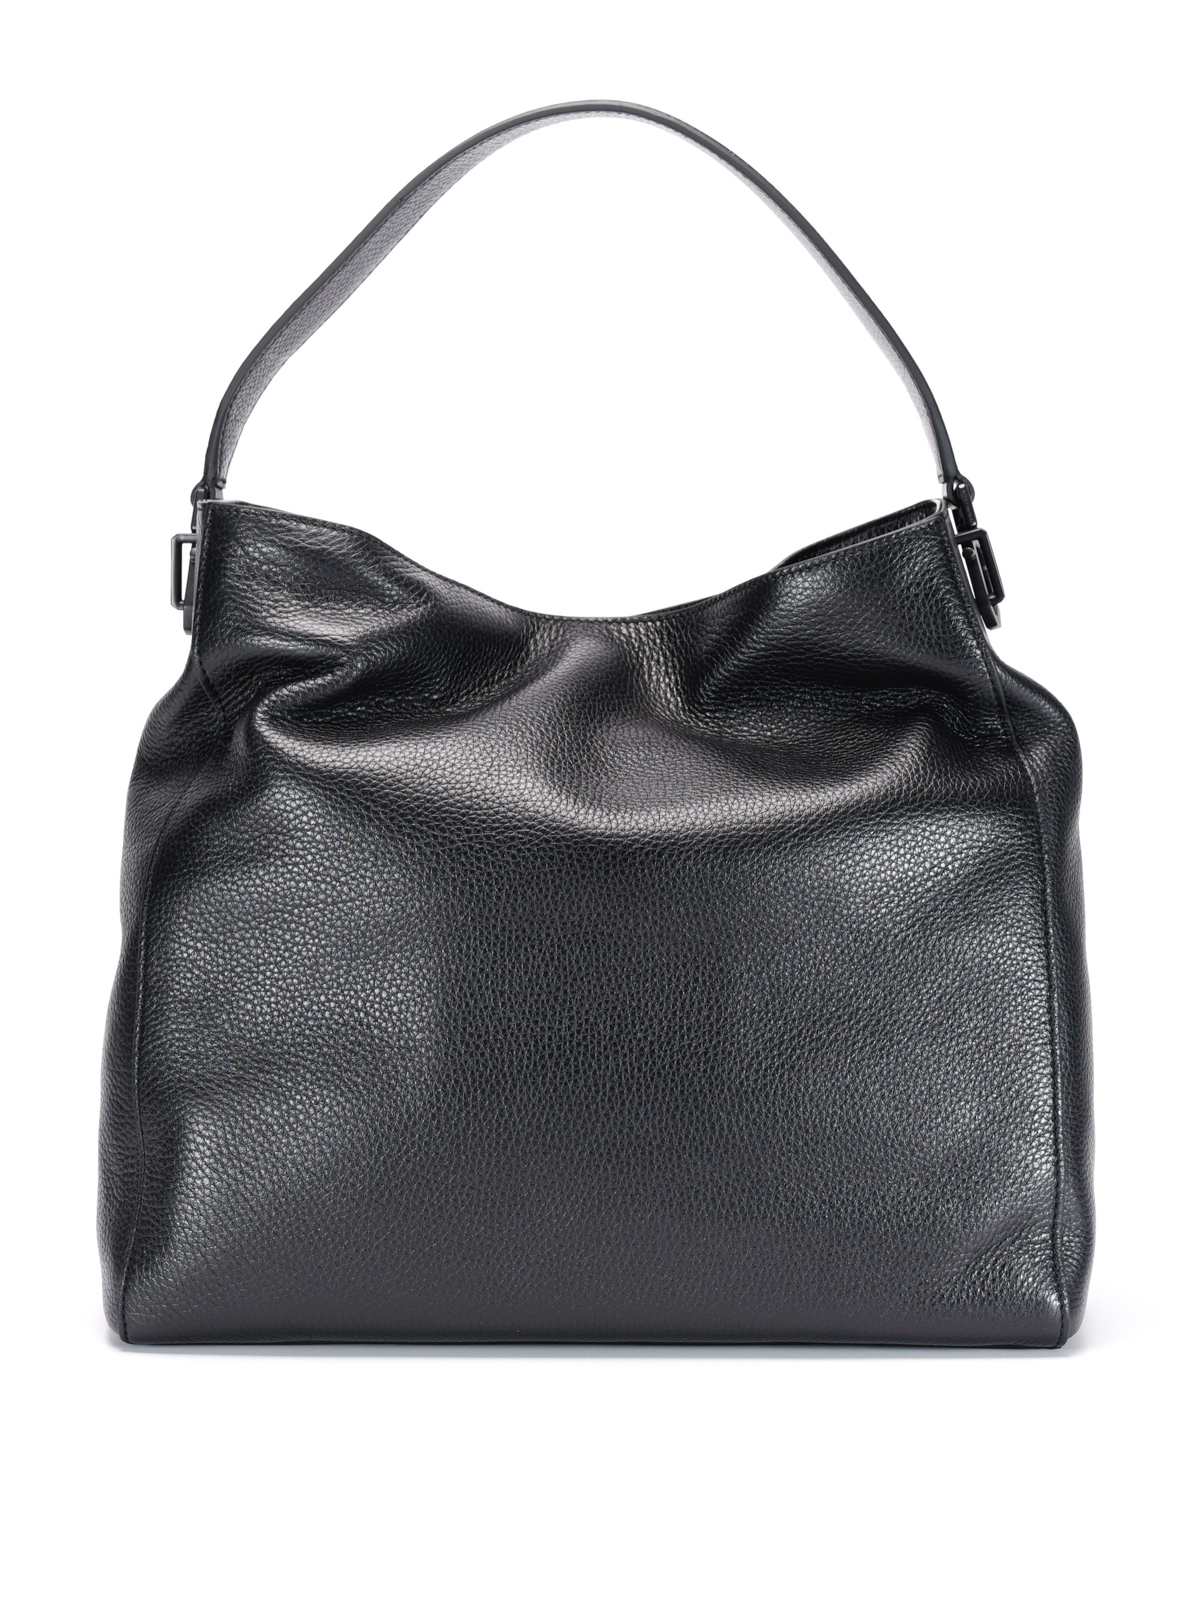 Shoulder bags Kendall + Kylie - Carina hammered leather hobo bag - CARINA